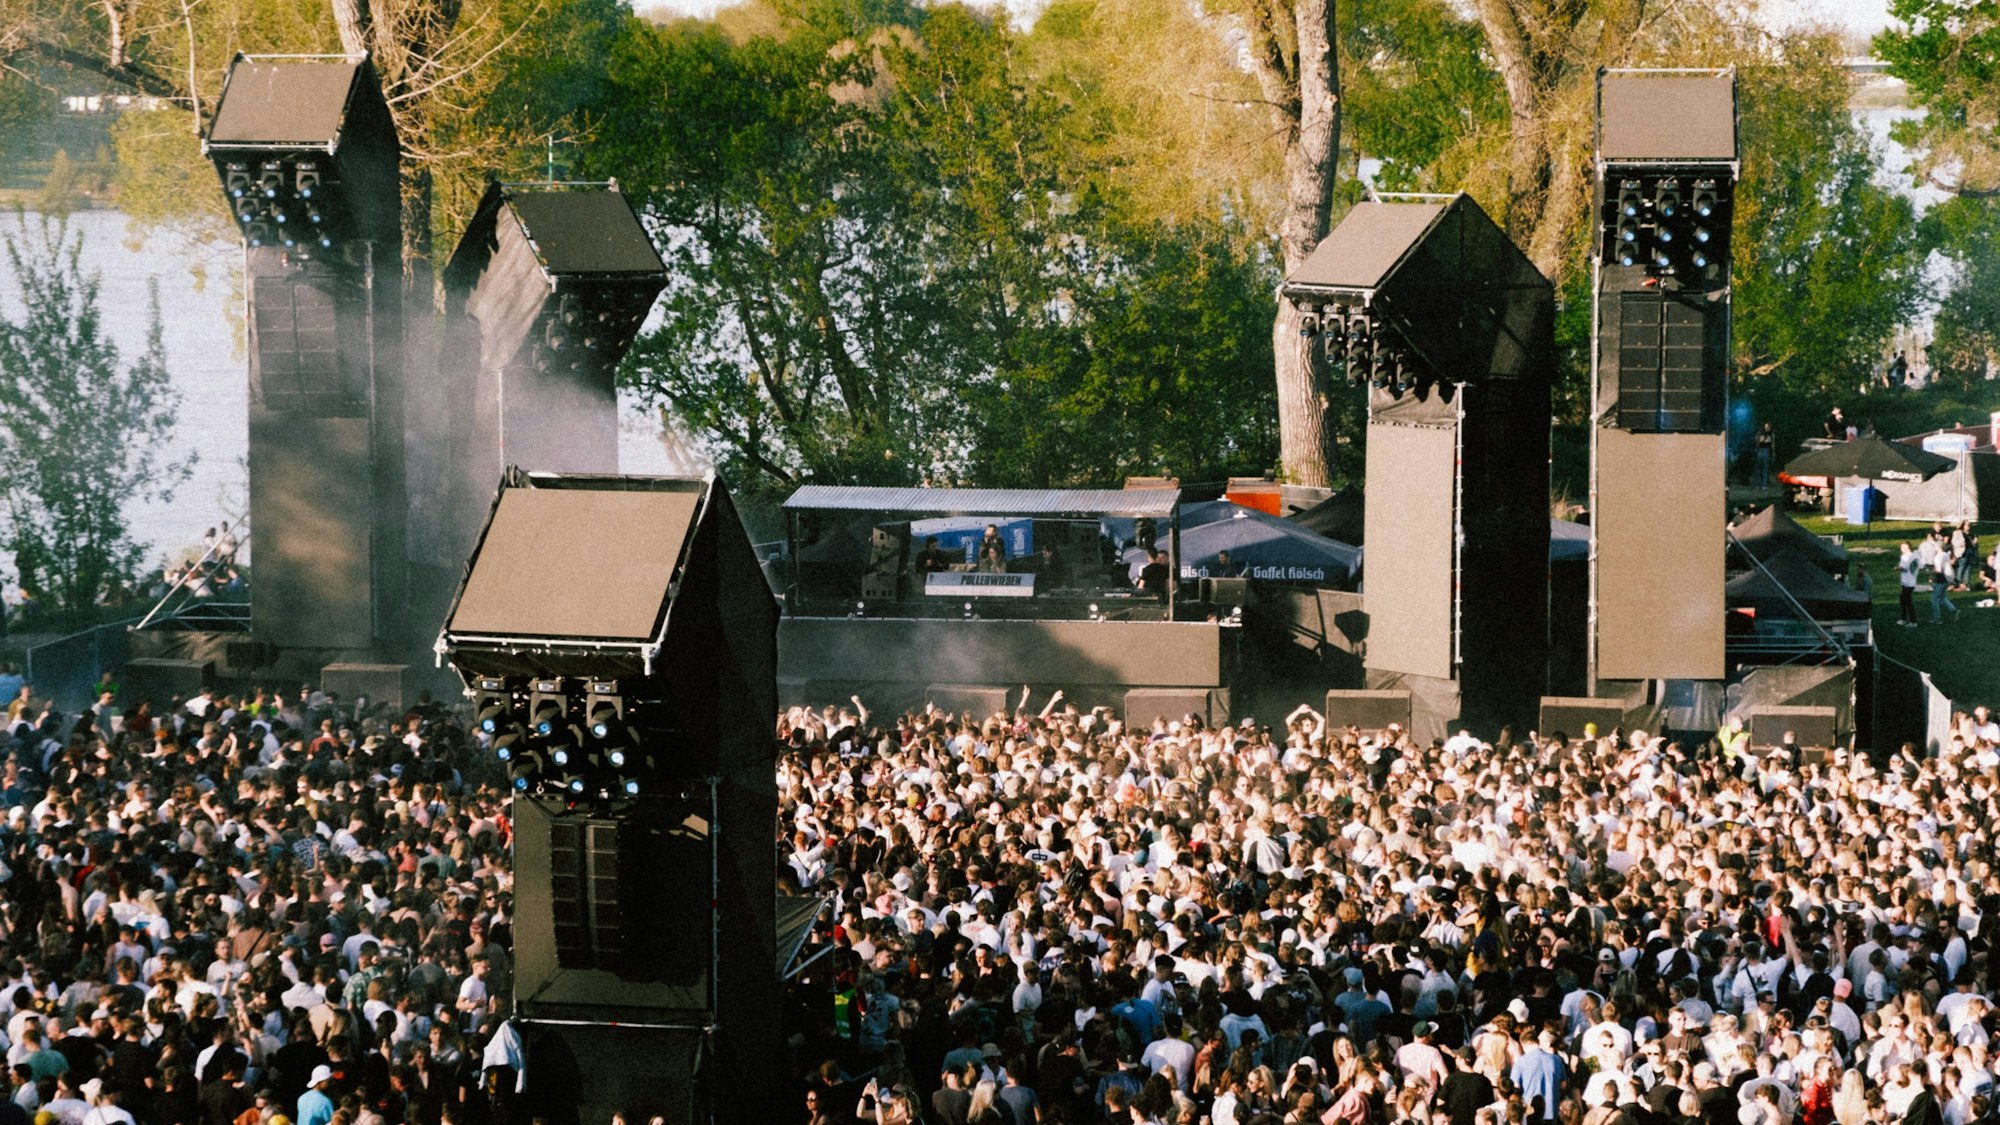 Menschenmenge vor der DJ-Bühne im Jugendpark